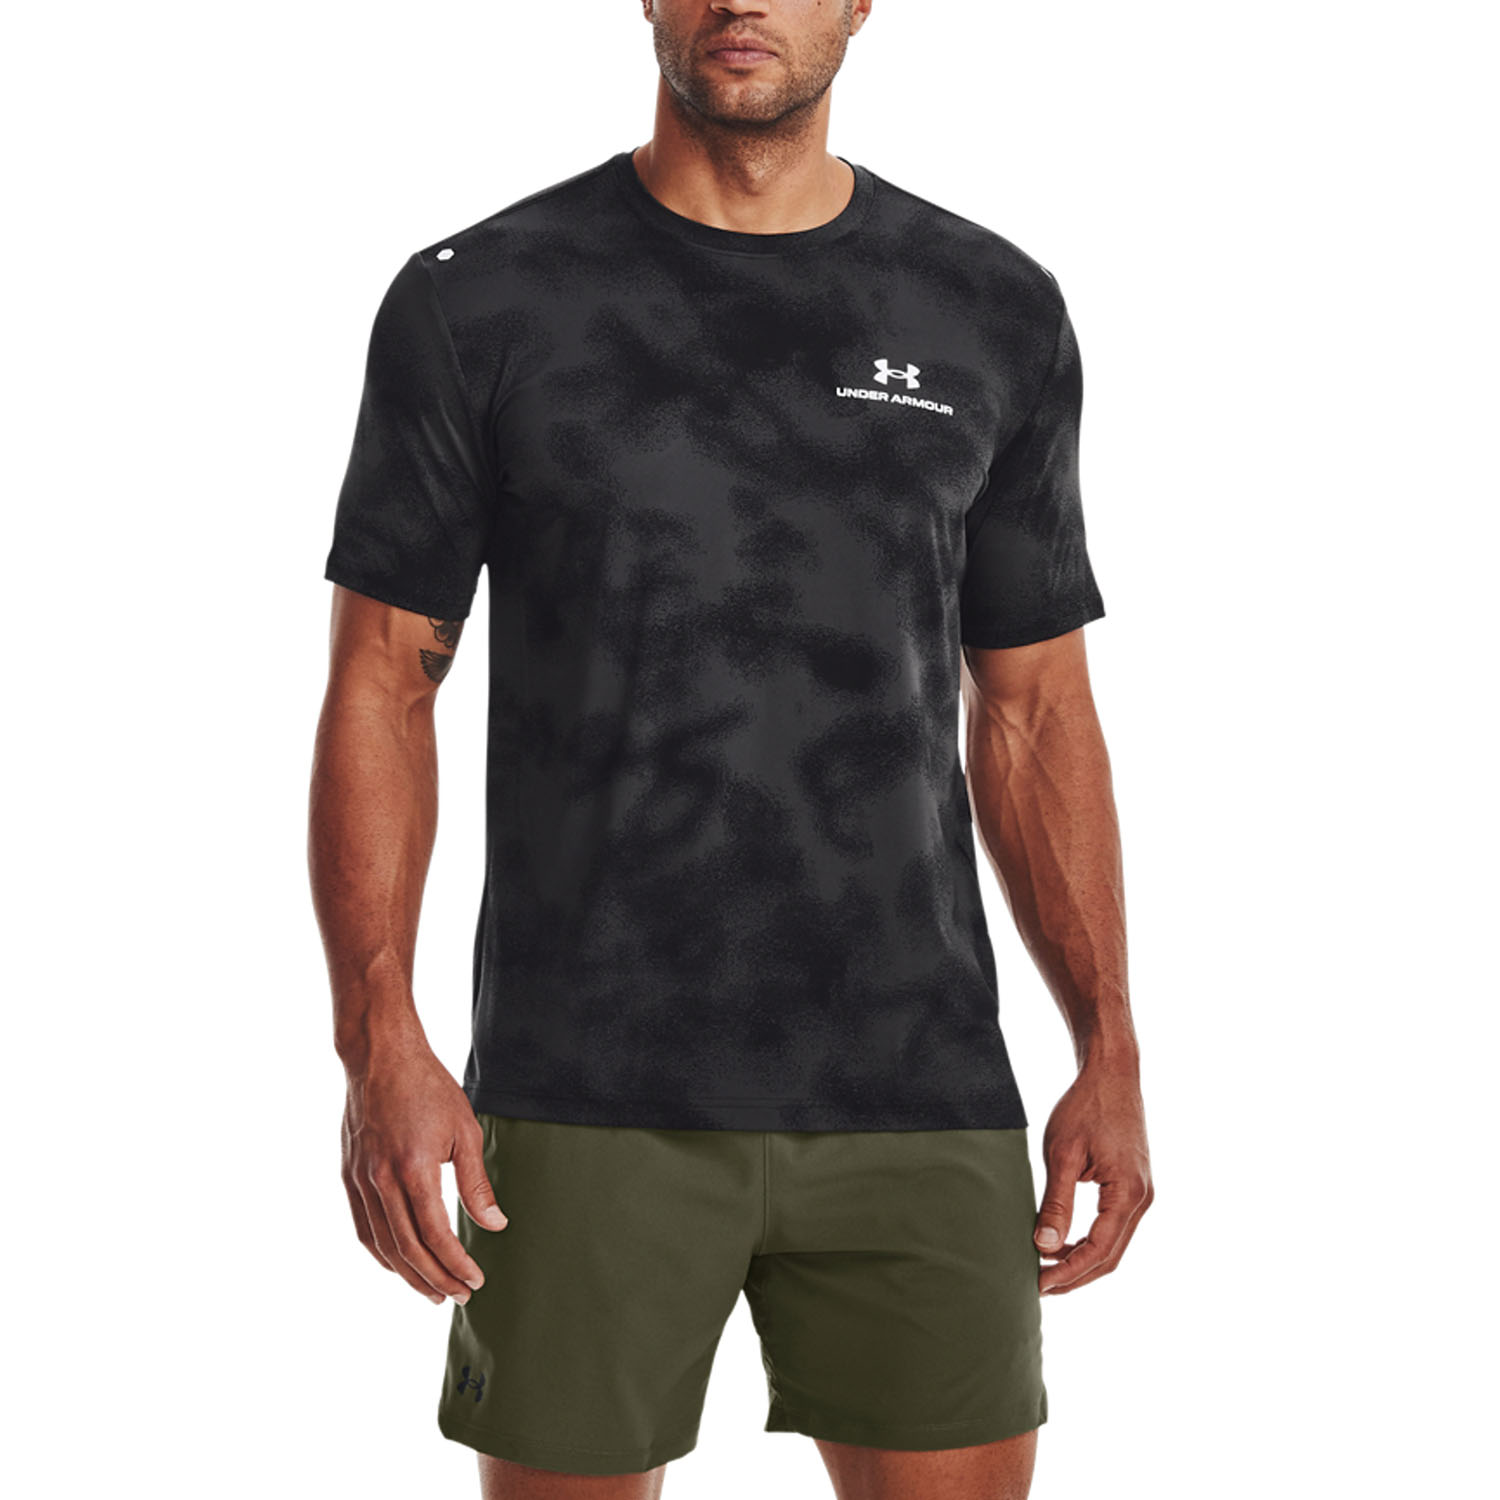 Under Armour Rush Energy Print Men's Tennis T-Shirt - Black/White